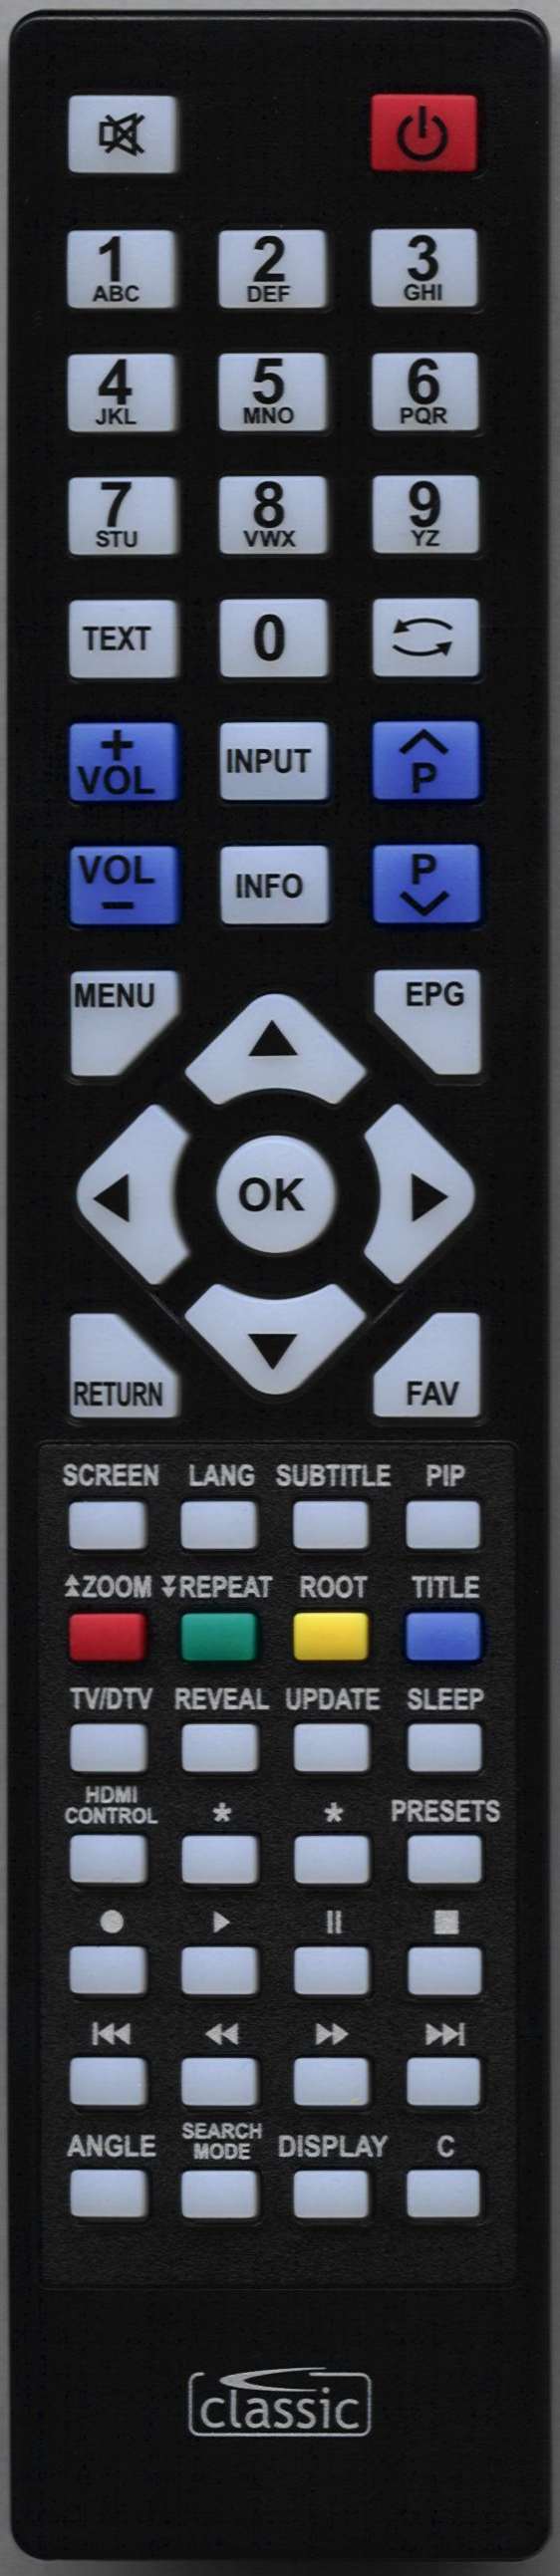 BUSH LED19916DVDHD Remote Control Alternative 